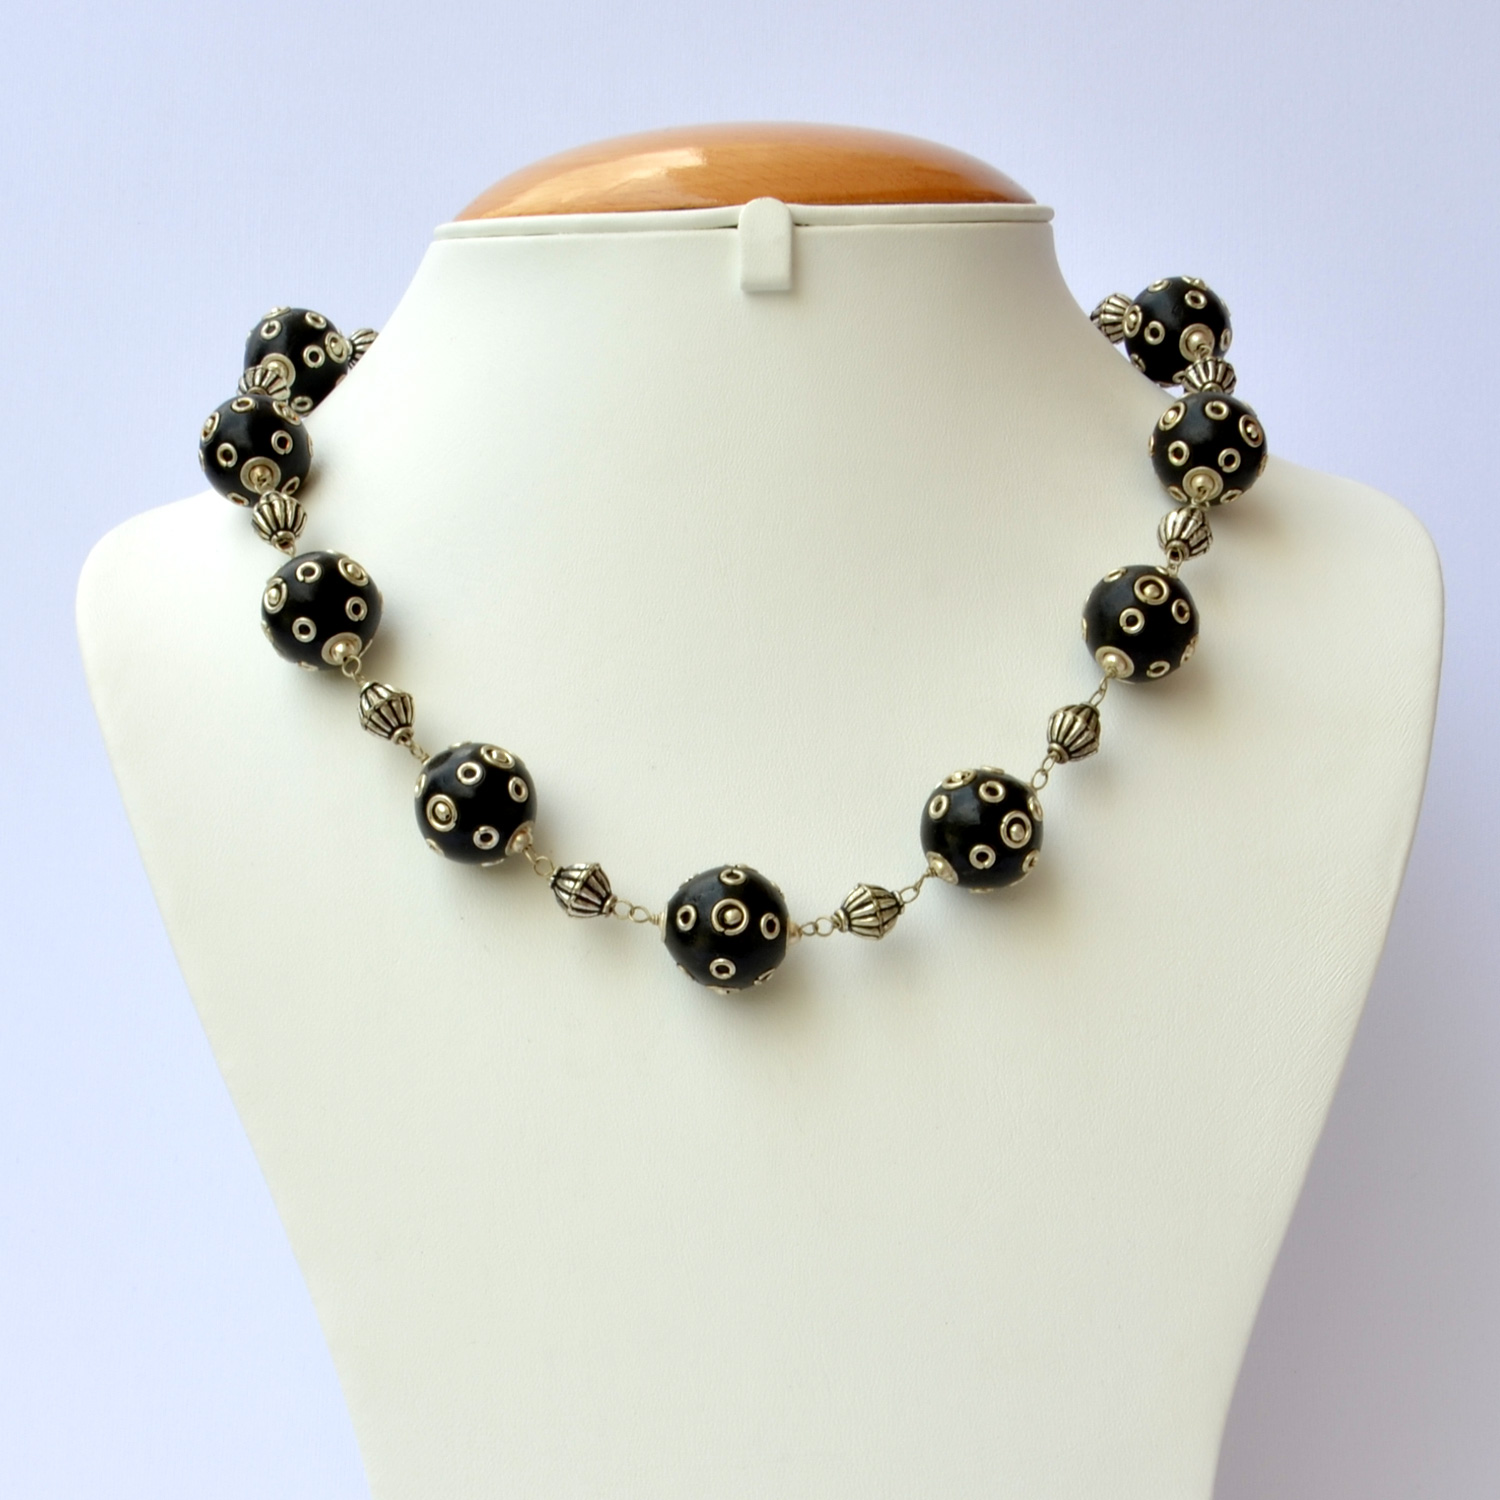 Handmade Necklace Studded with Black Beads having Metal Rings | Maruti ...